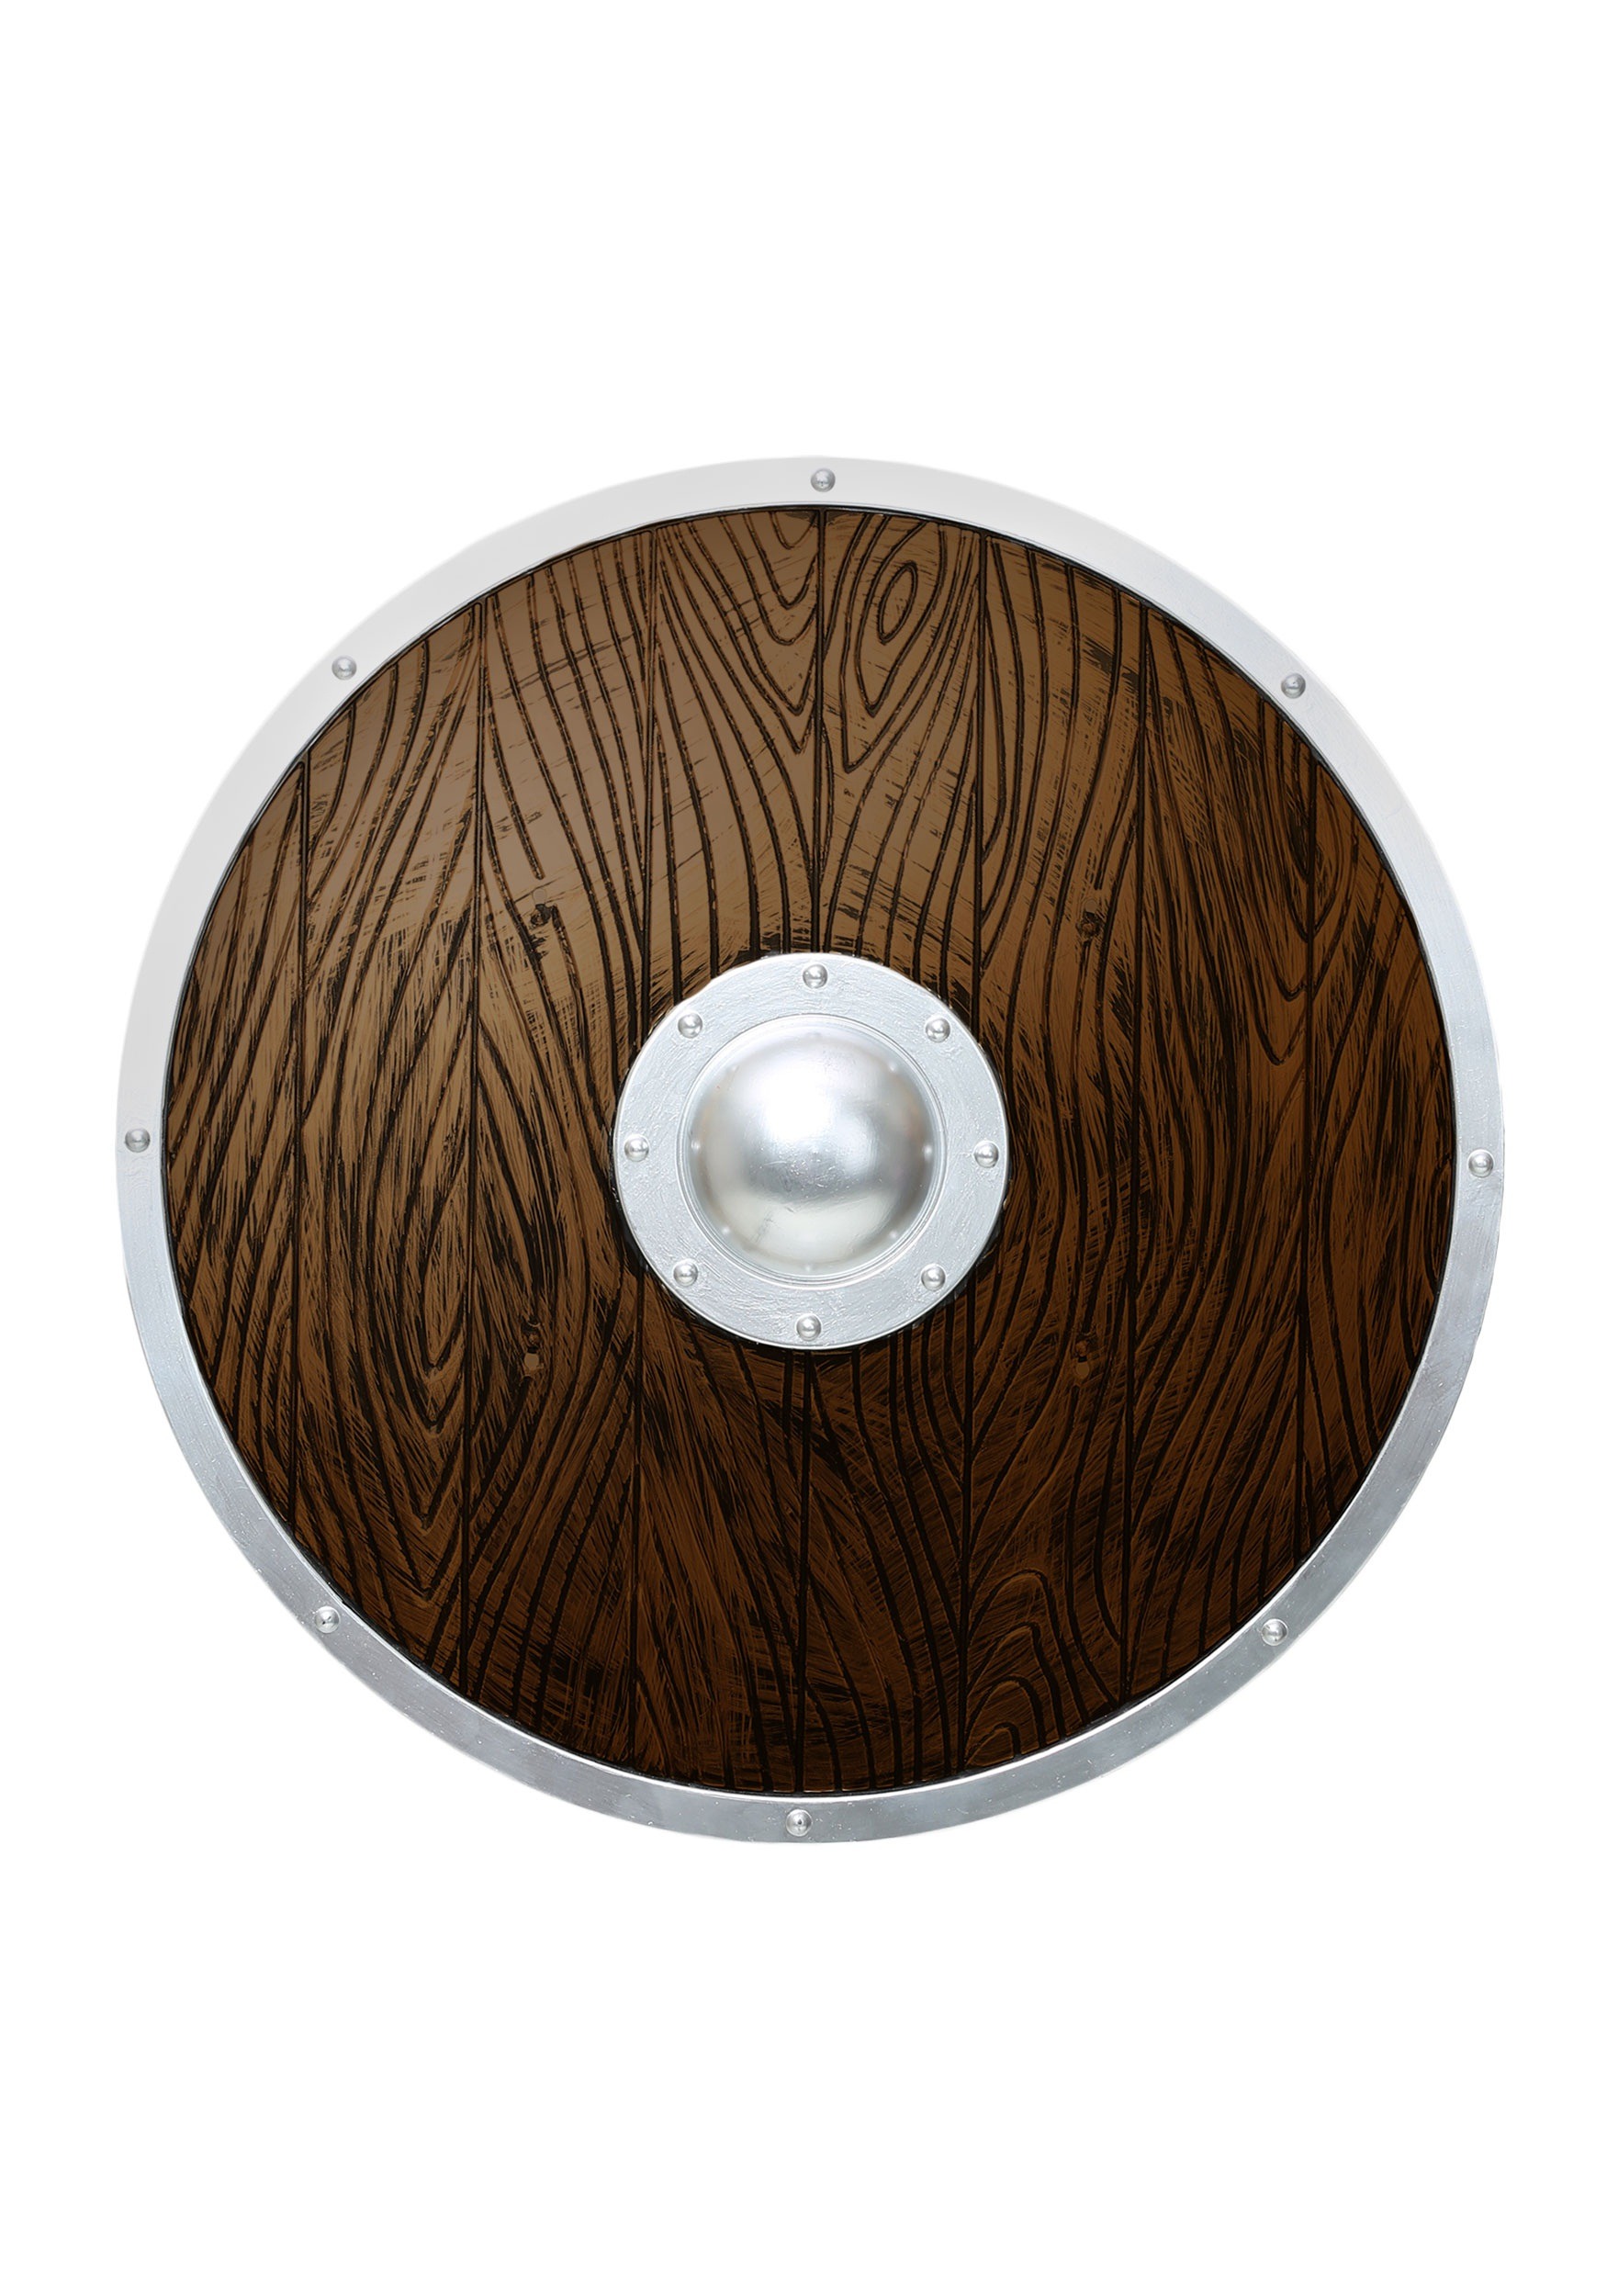 Wood-Look Viking Shield